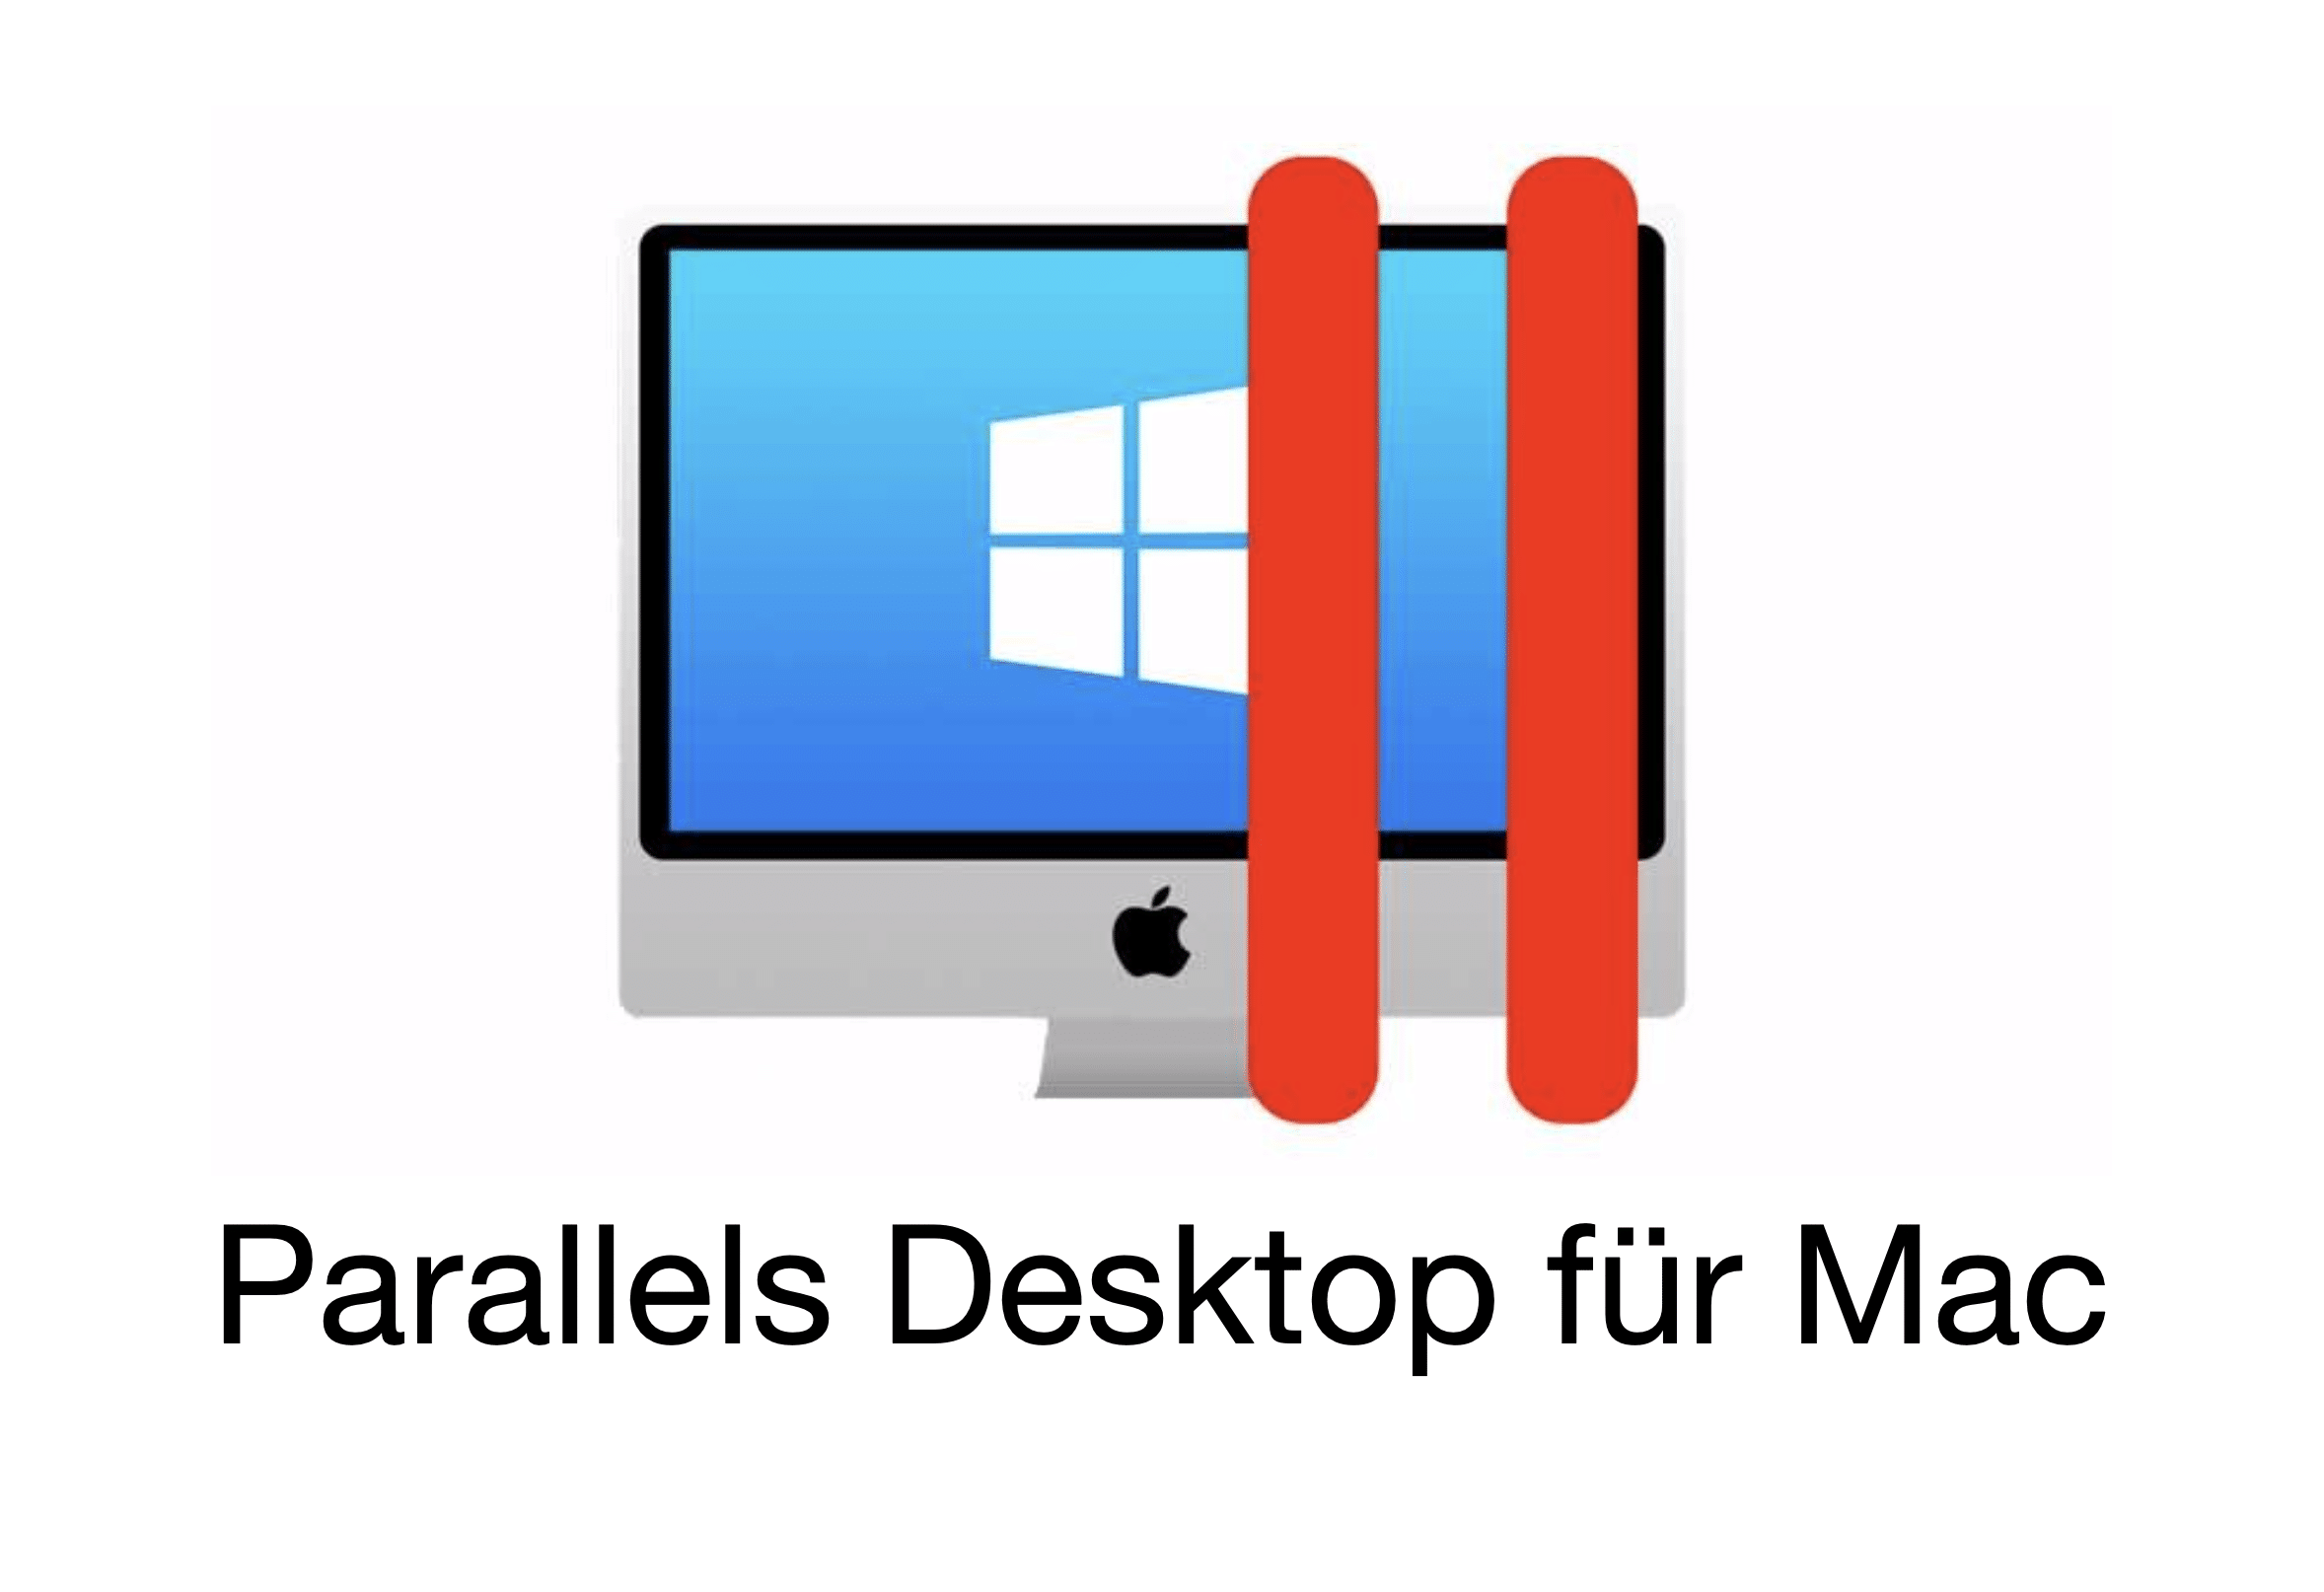 review parallels desktop 10 for mac